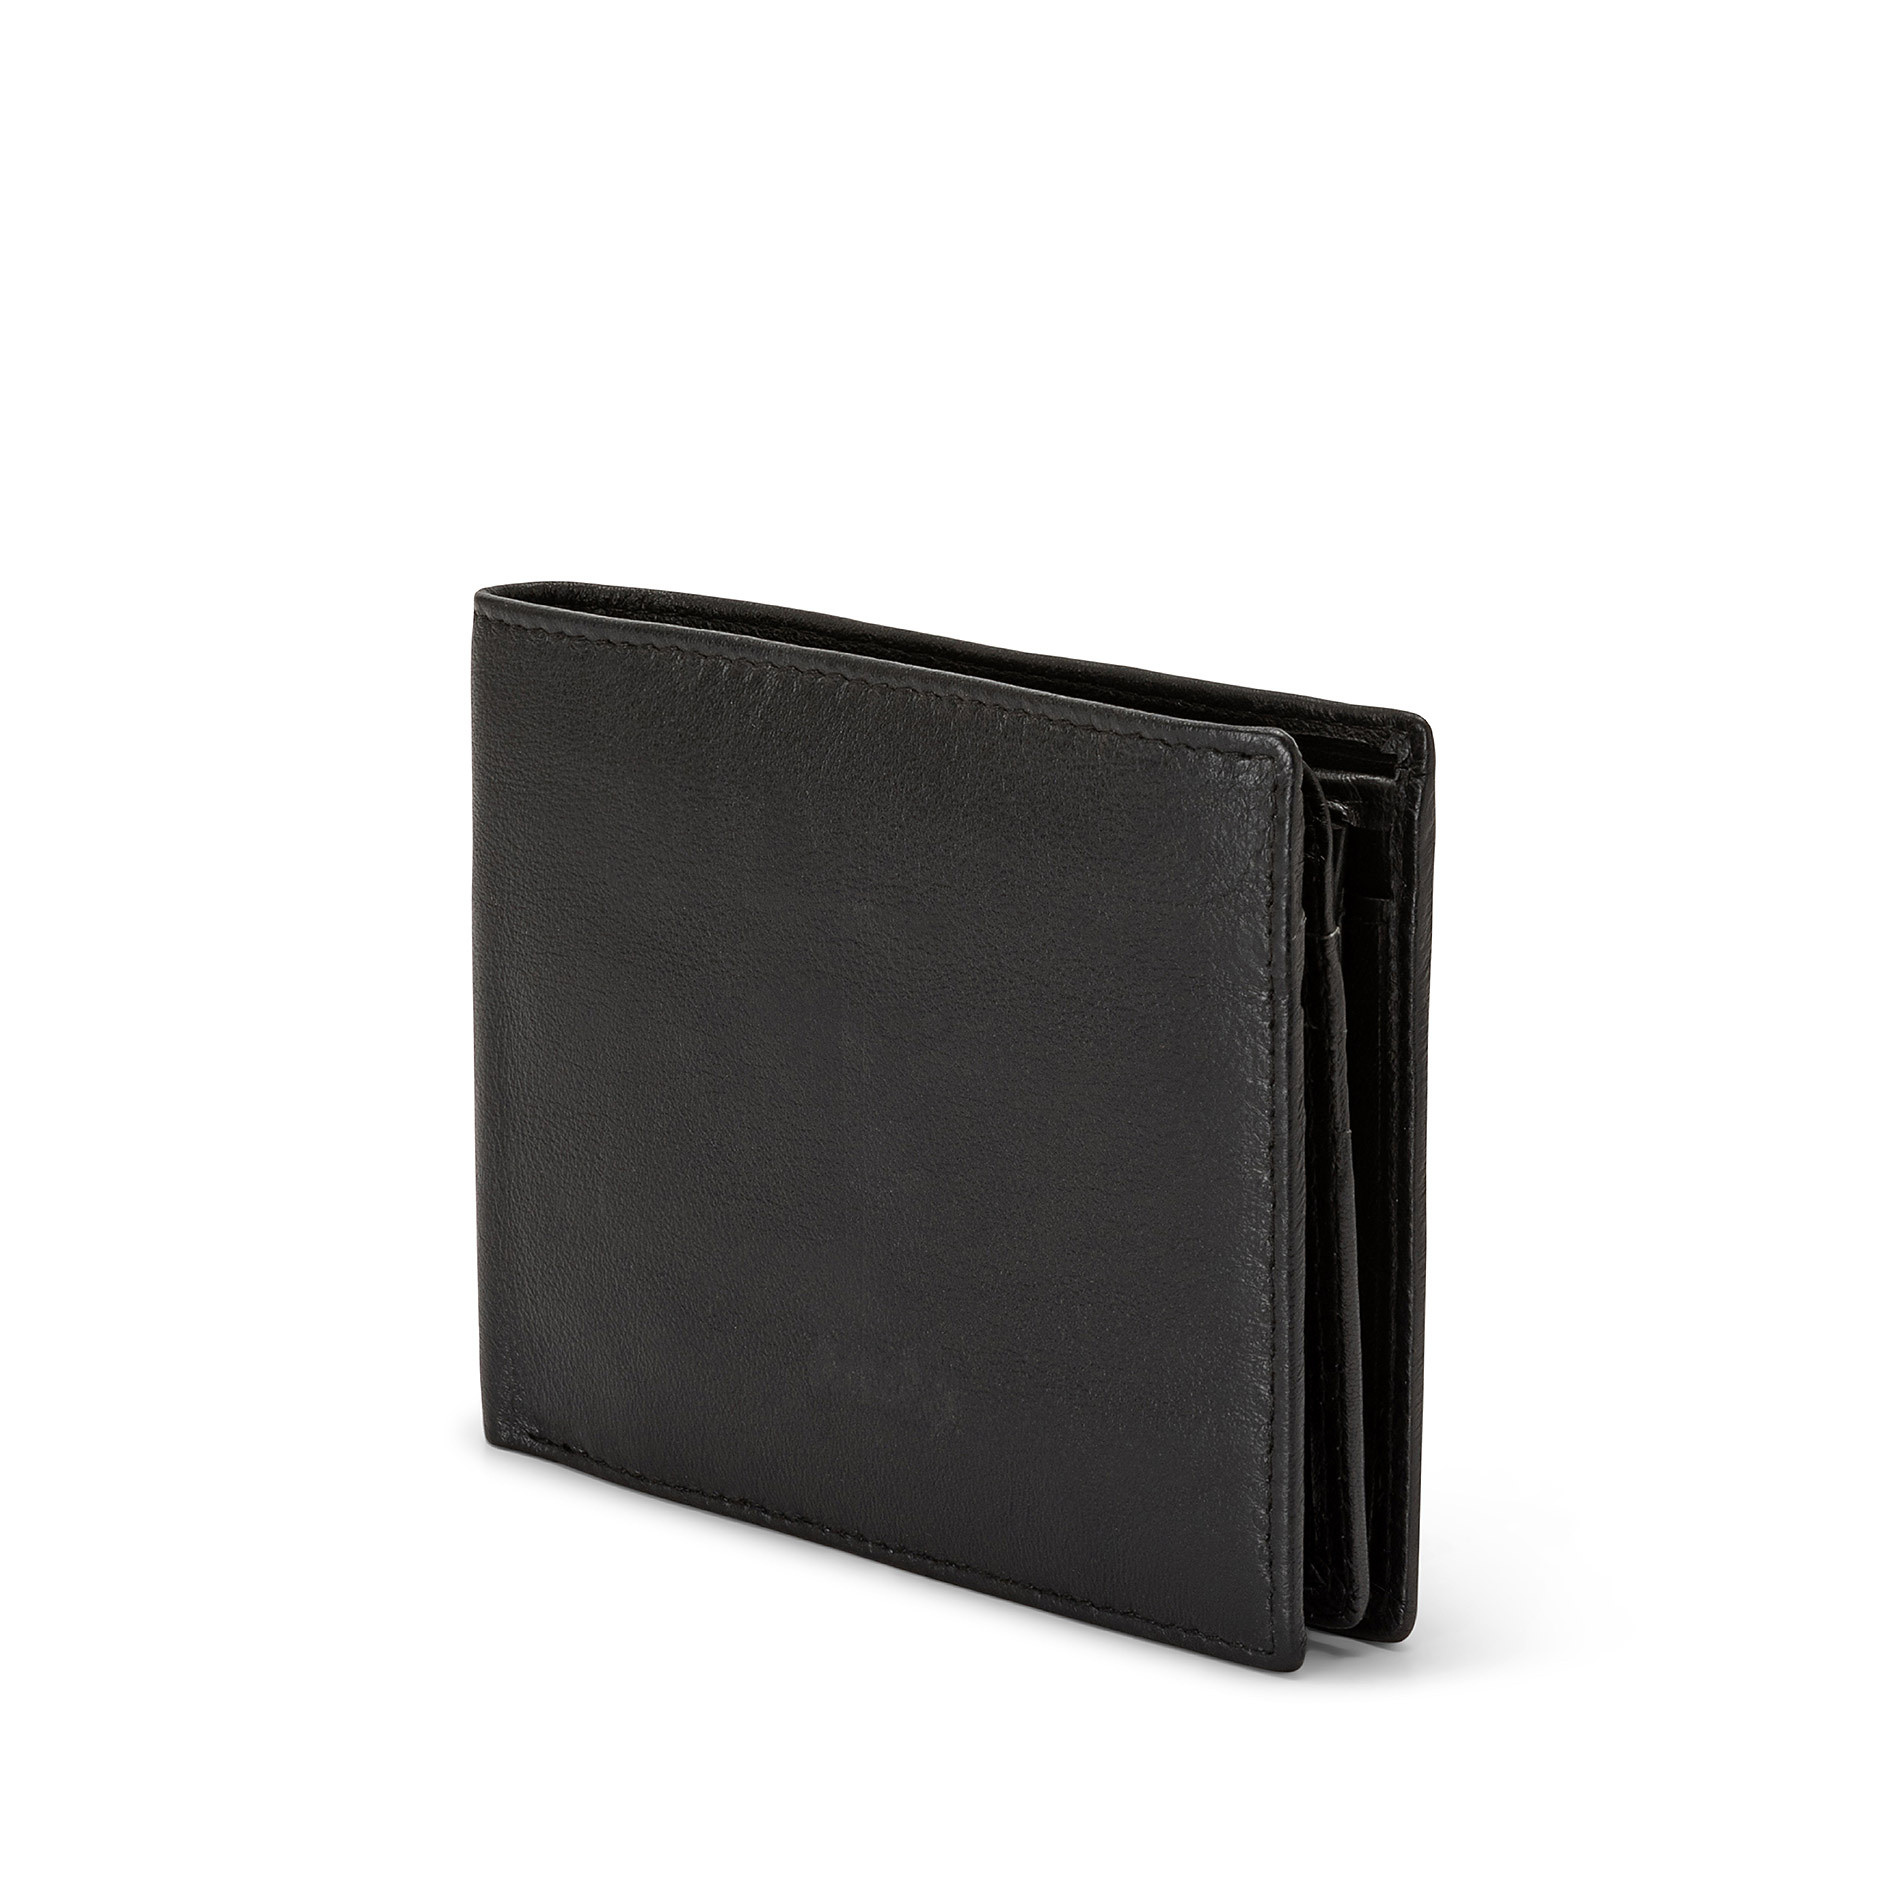 Luca D'Altieri leather wallet, Black, large image number 1